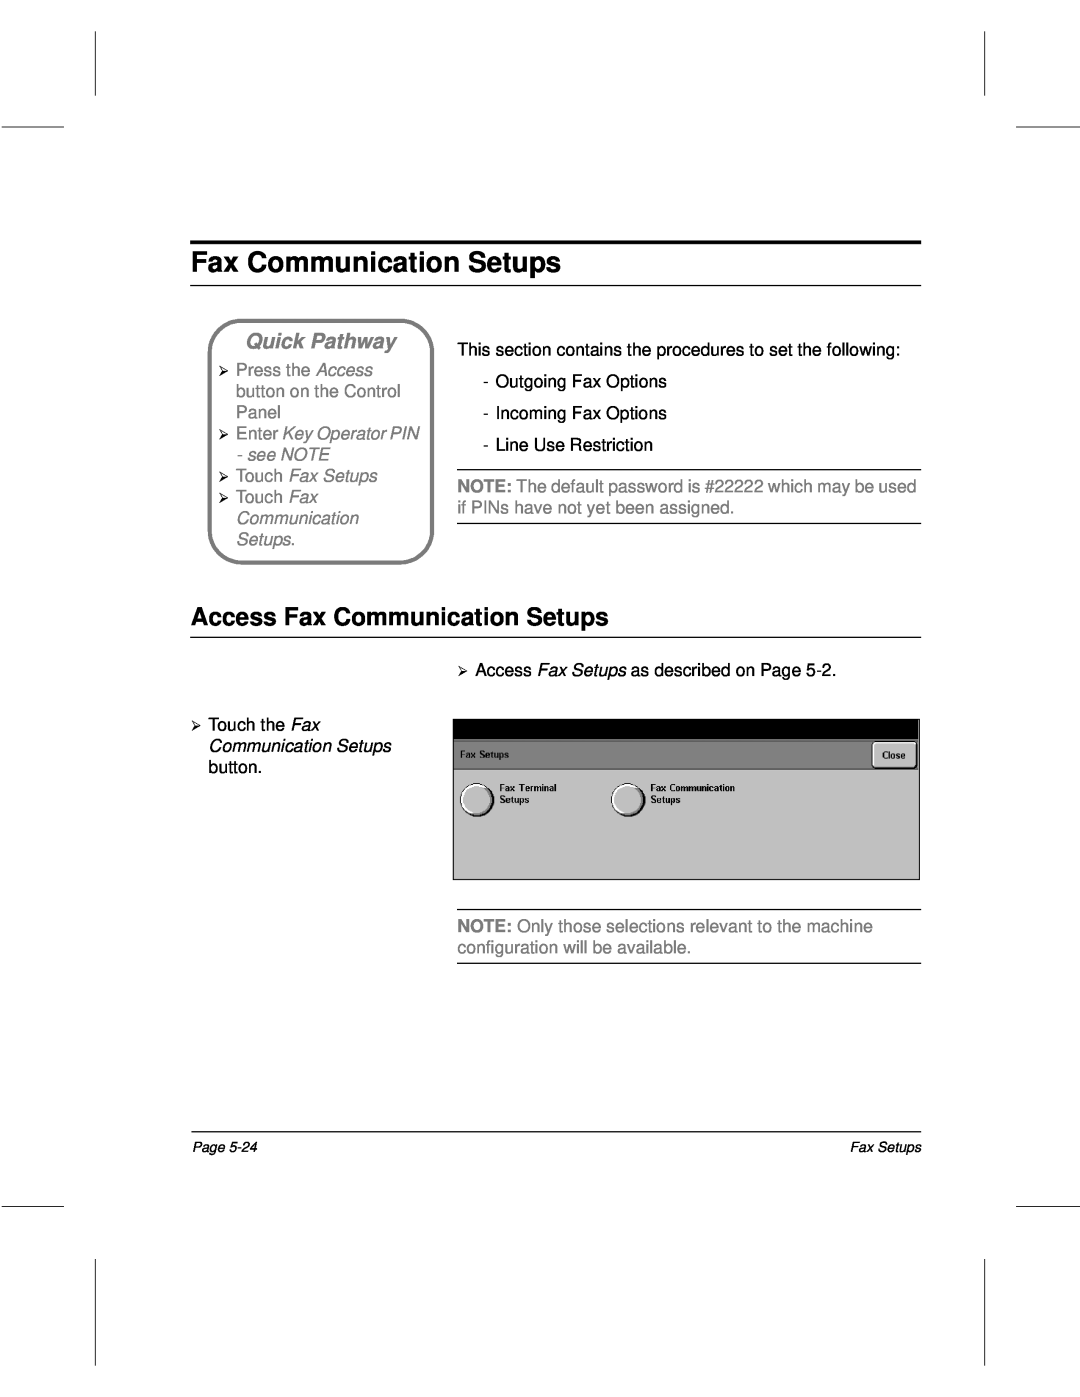 Xerox 220, 340 Fax Communication Setups, Access Fax Communication¿ Setups, Quick Pathway, Enter Key Operator PIN see NOTE 